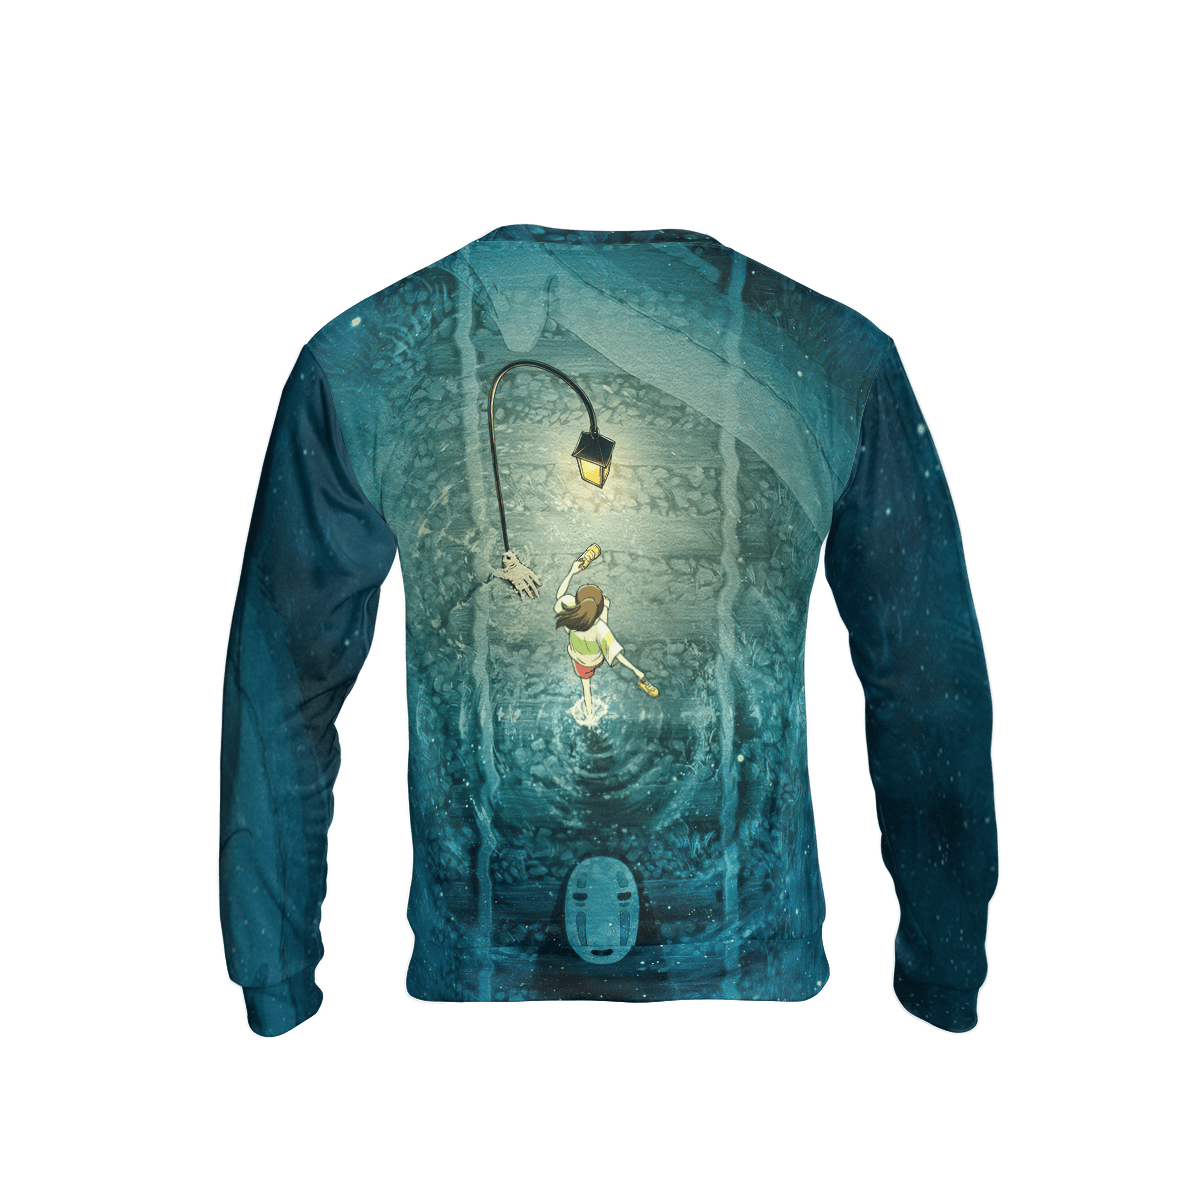 Spirited Away Poster 3D Sweatshirt